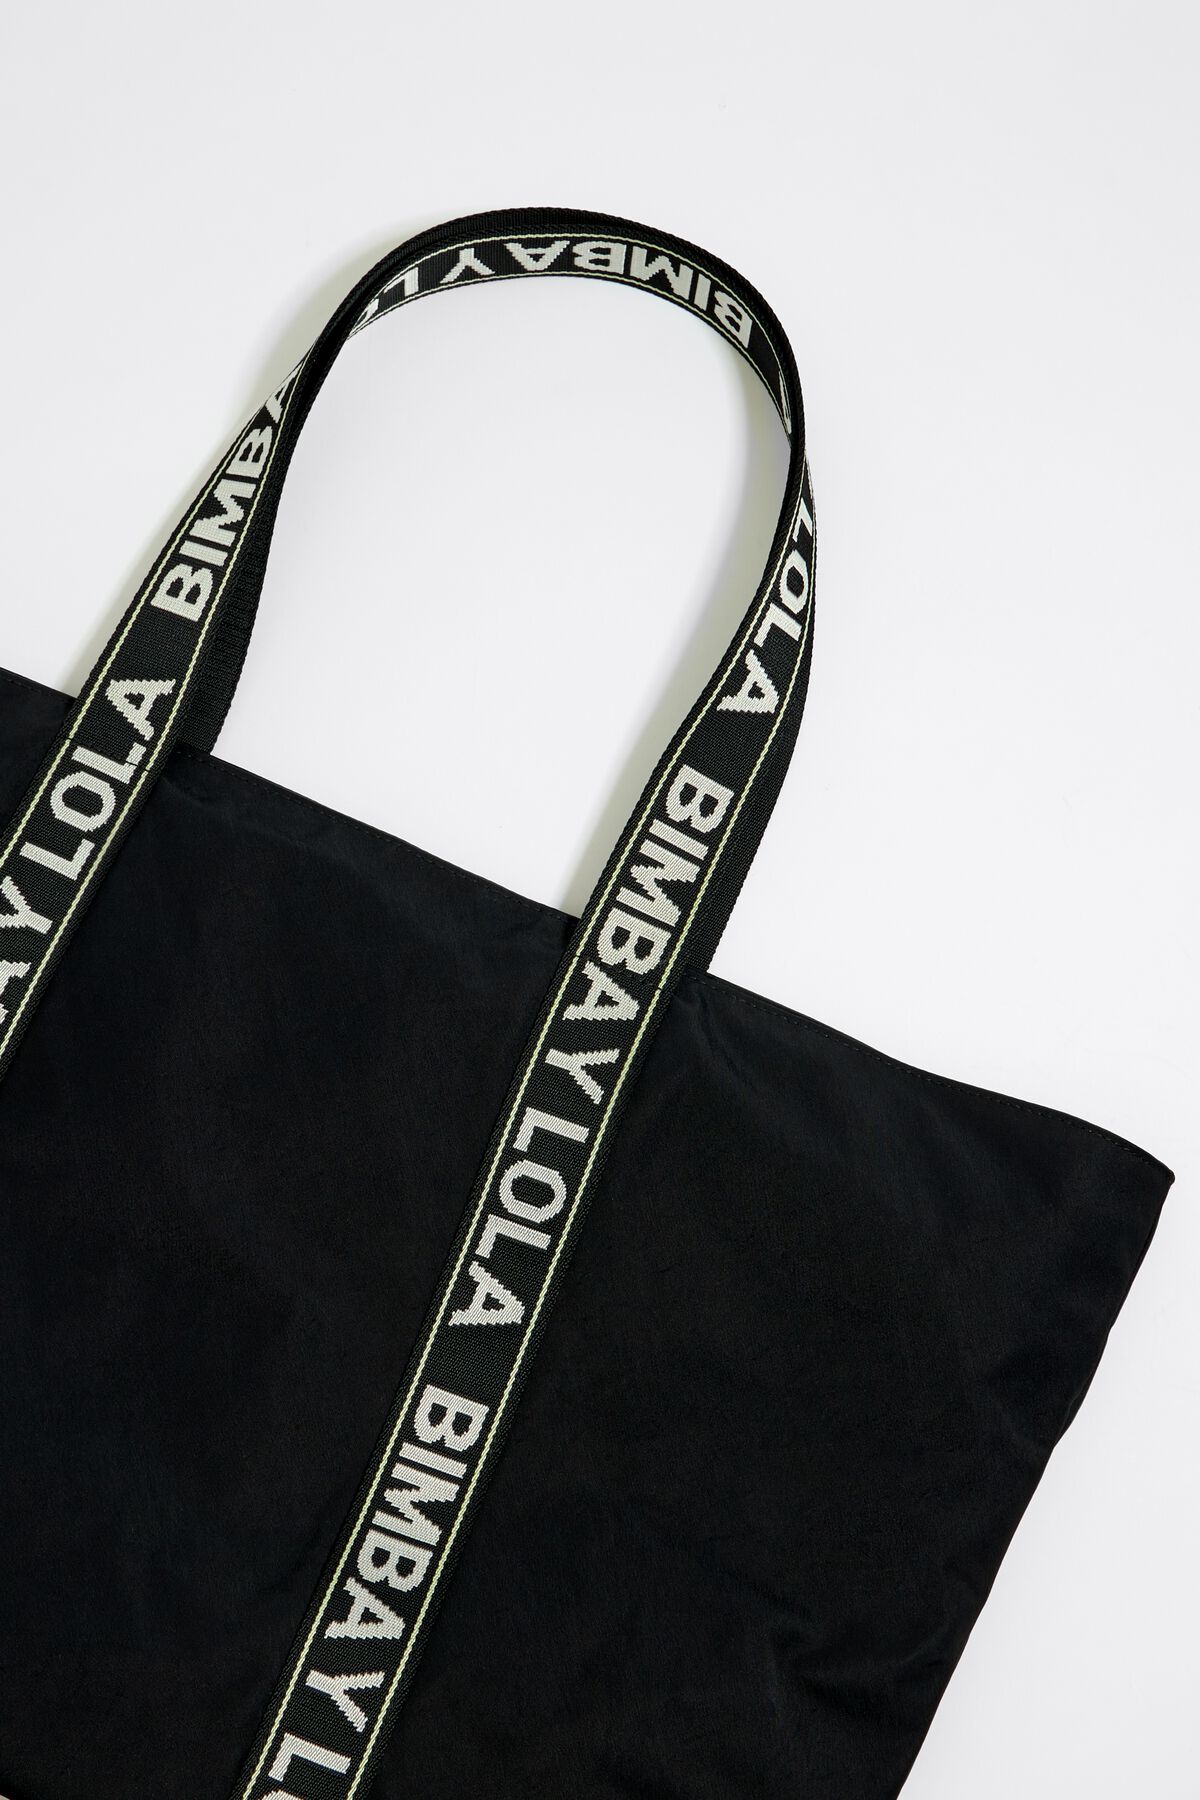 BIMBA & LOLA Black/ Orange Nylon Convertible Drawstring Shoulder Tote  Bag